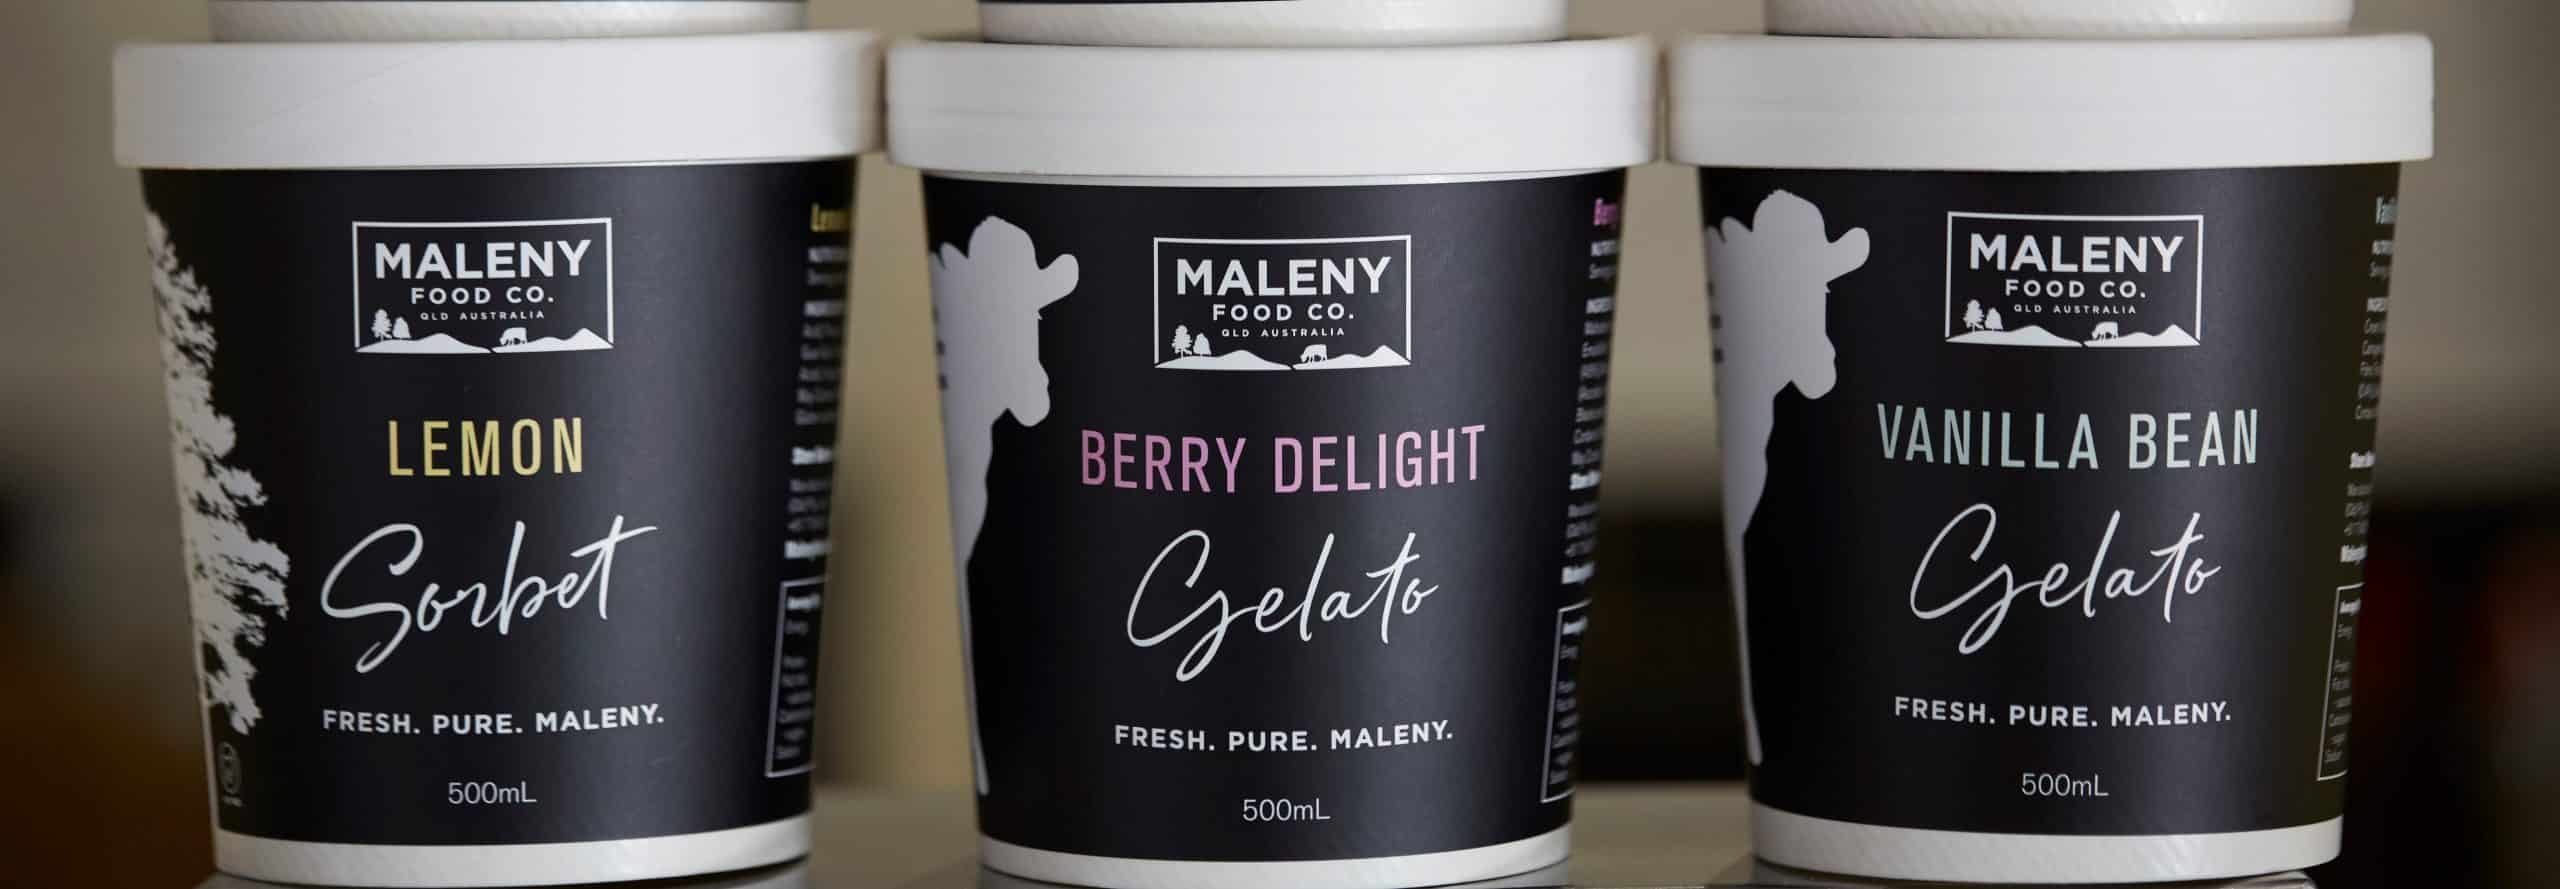 Maleny Food Co. Gelato Retail Tubs. Lemon Sorbet, Berry Delight Gelato and Vanilla Bean Gelato